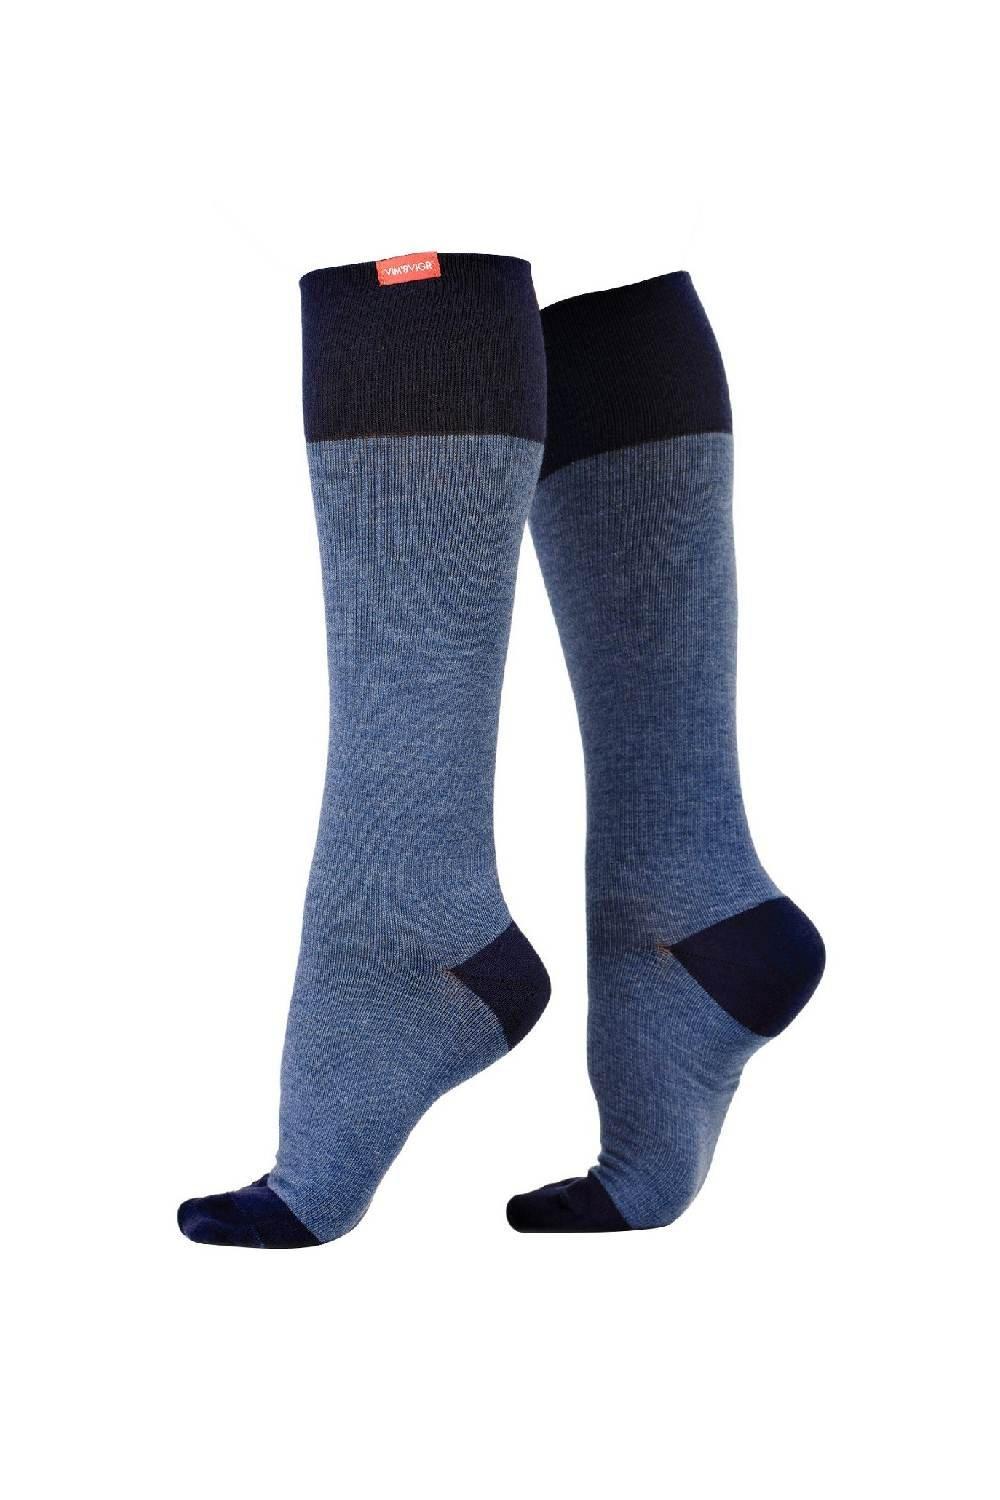 Wide Calf Graduated Compression Breathable Socks 20-30 mmhg